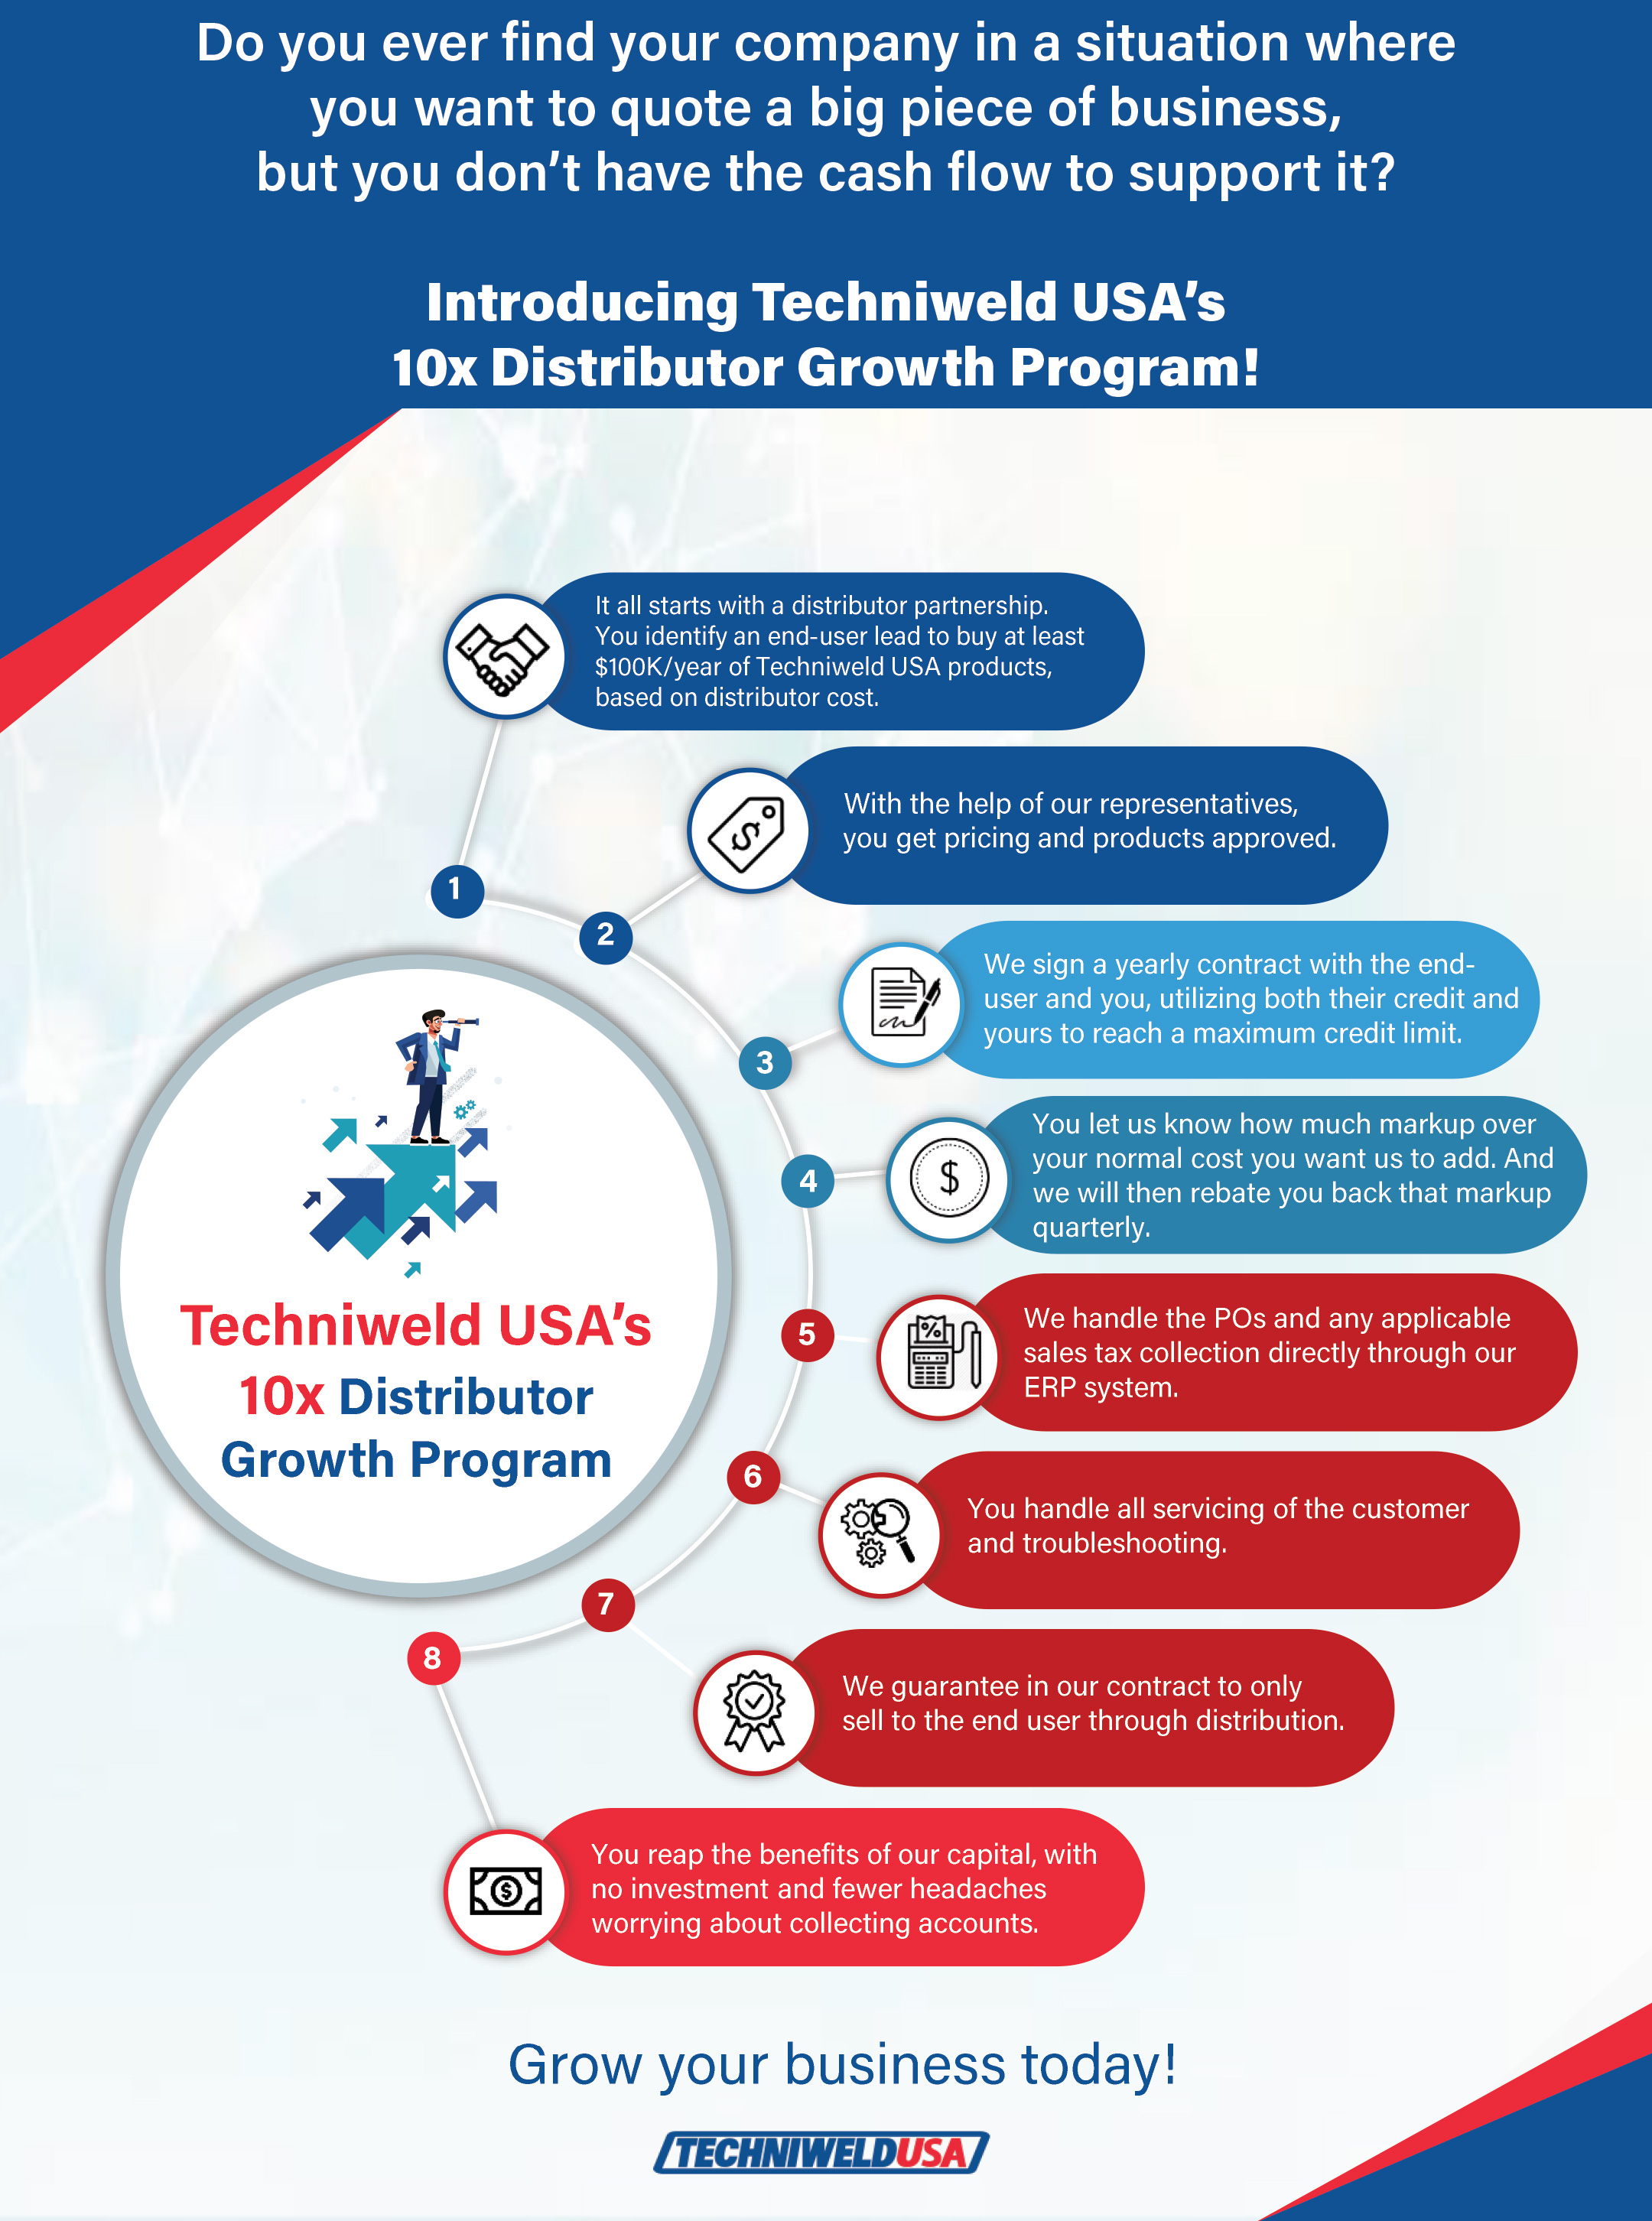 Flyer describing Techniweld USA 10x Distributor Growth Program